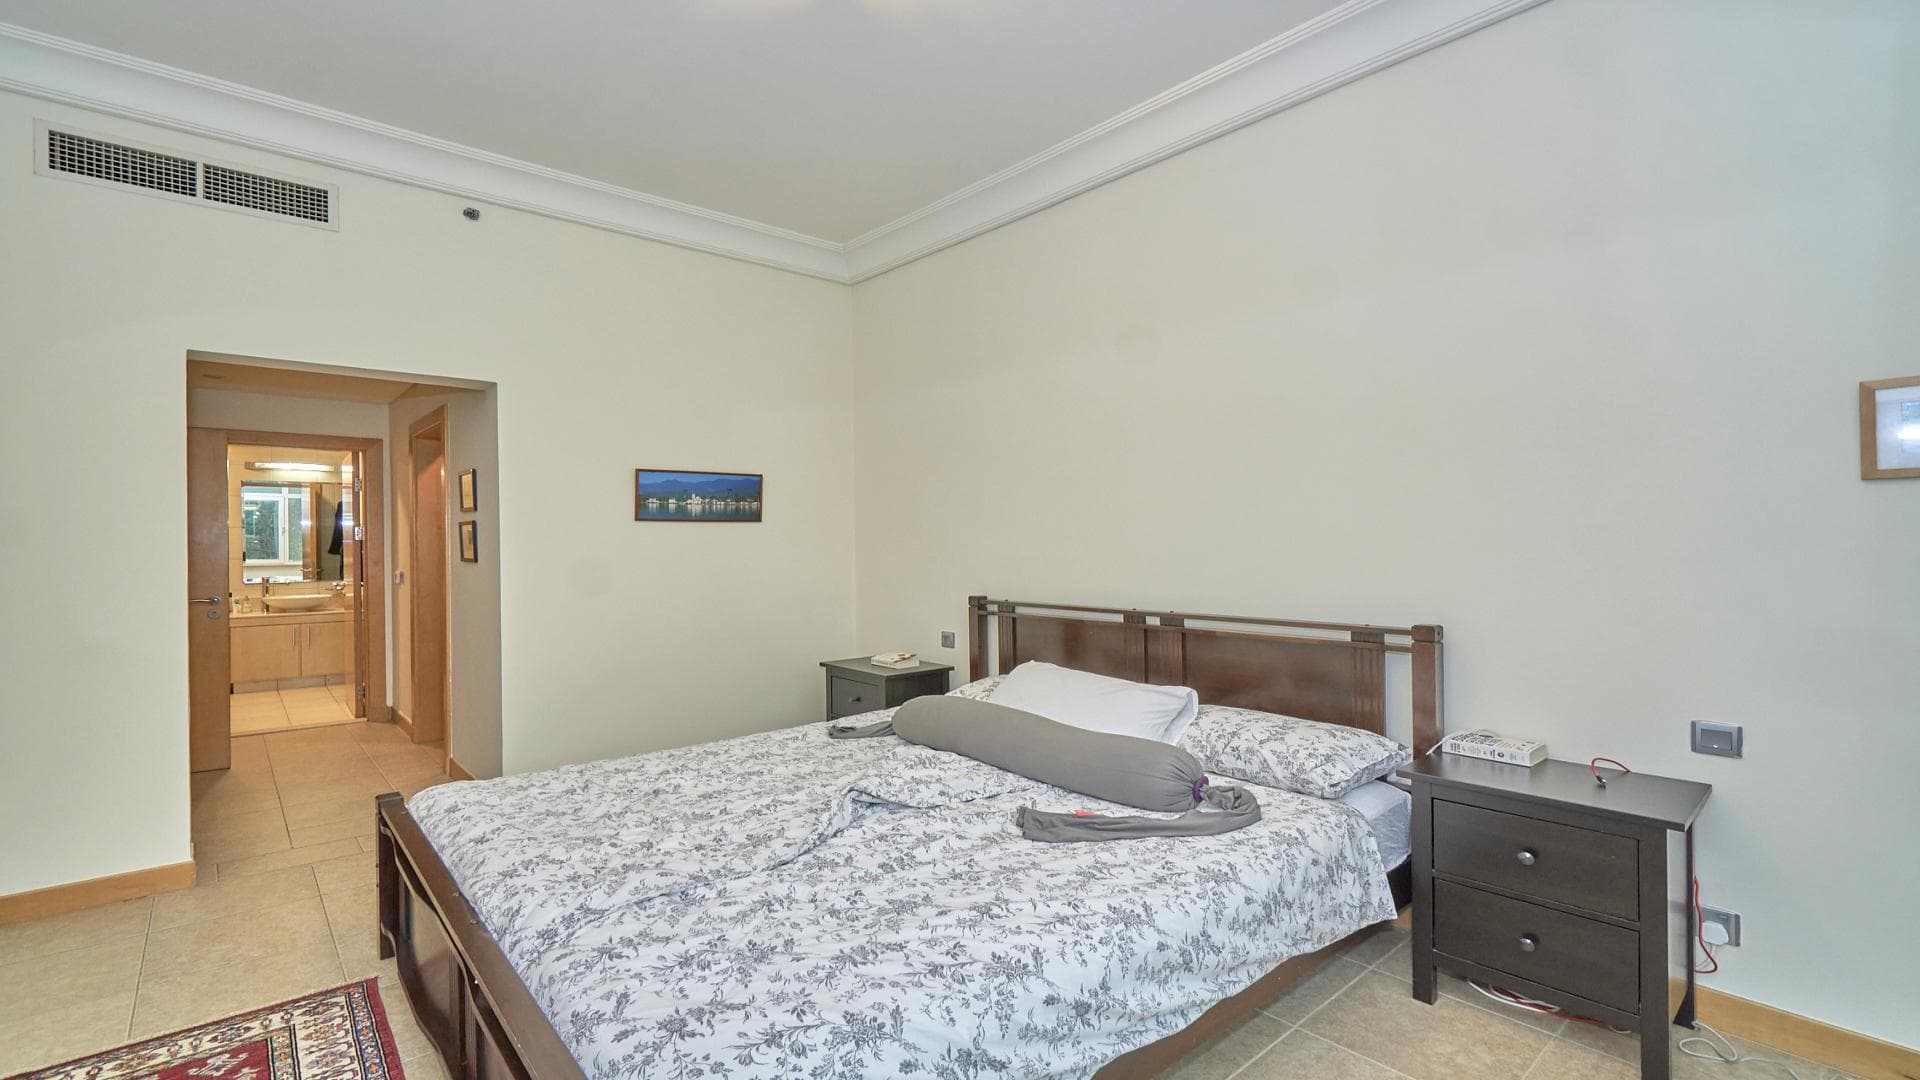 1 Bedroom Apartment For Sale Al Sheraa Tower Lp36737 2dc1236dcb8a6e00.jpg